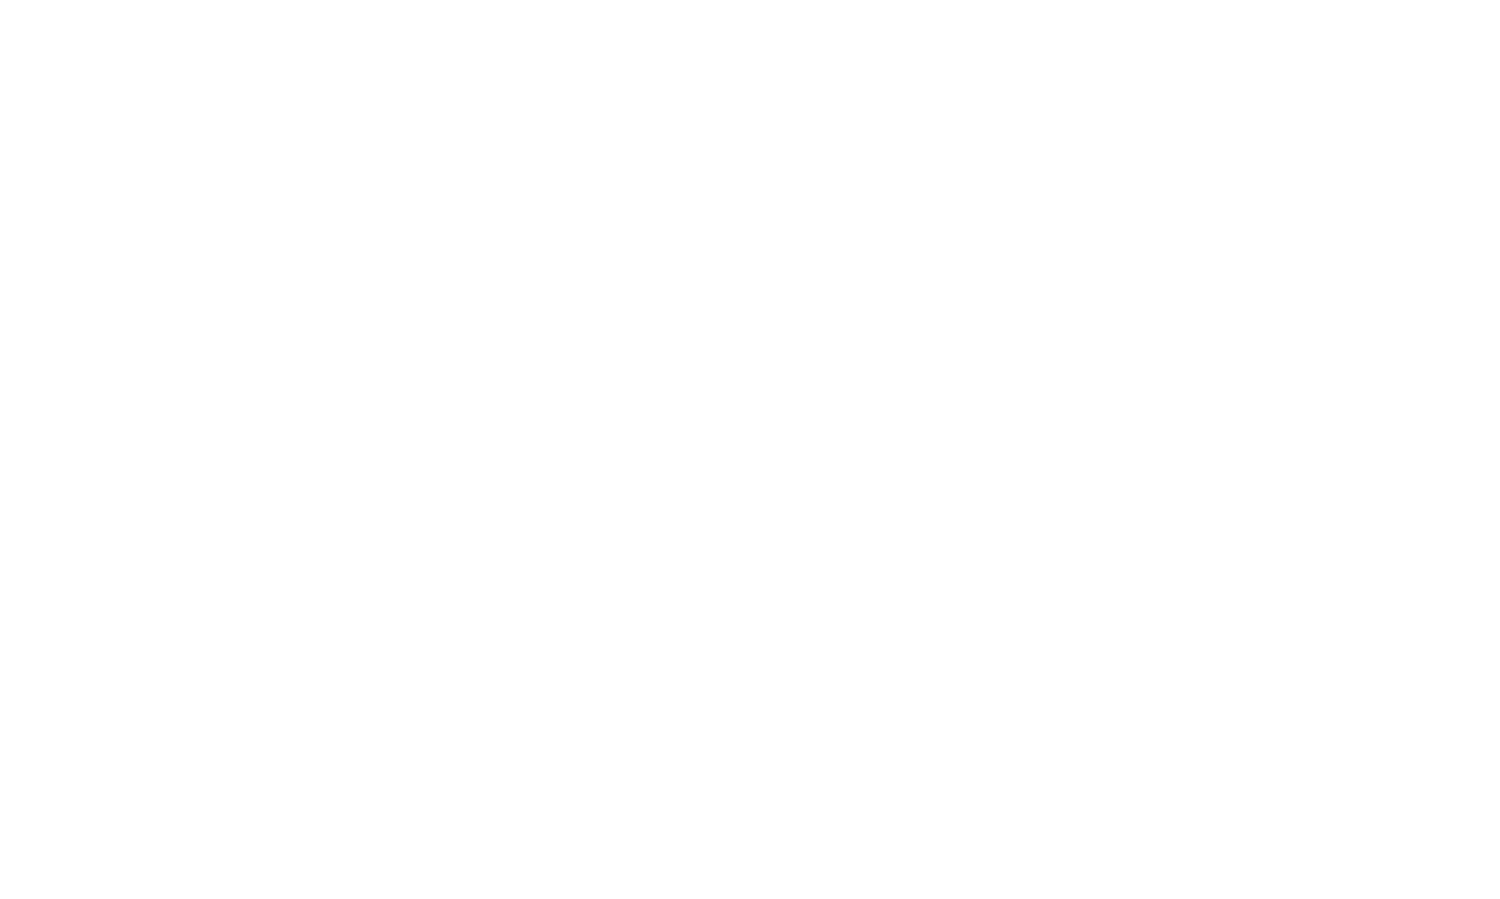 Collide City Church